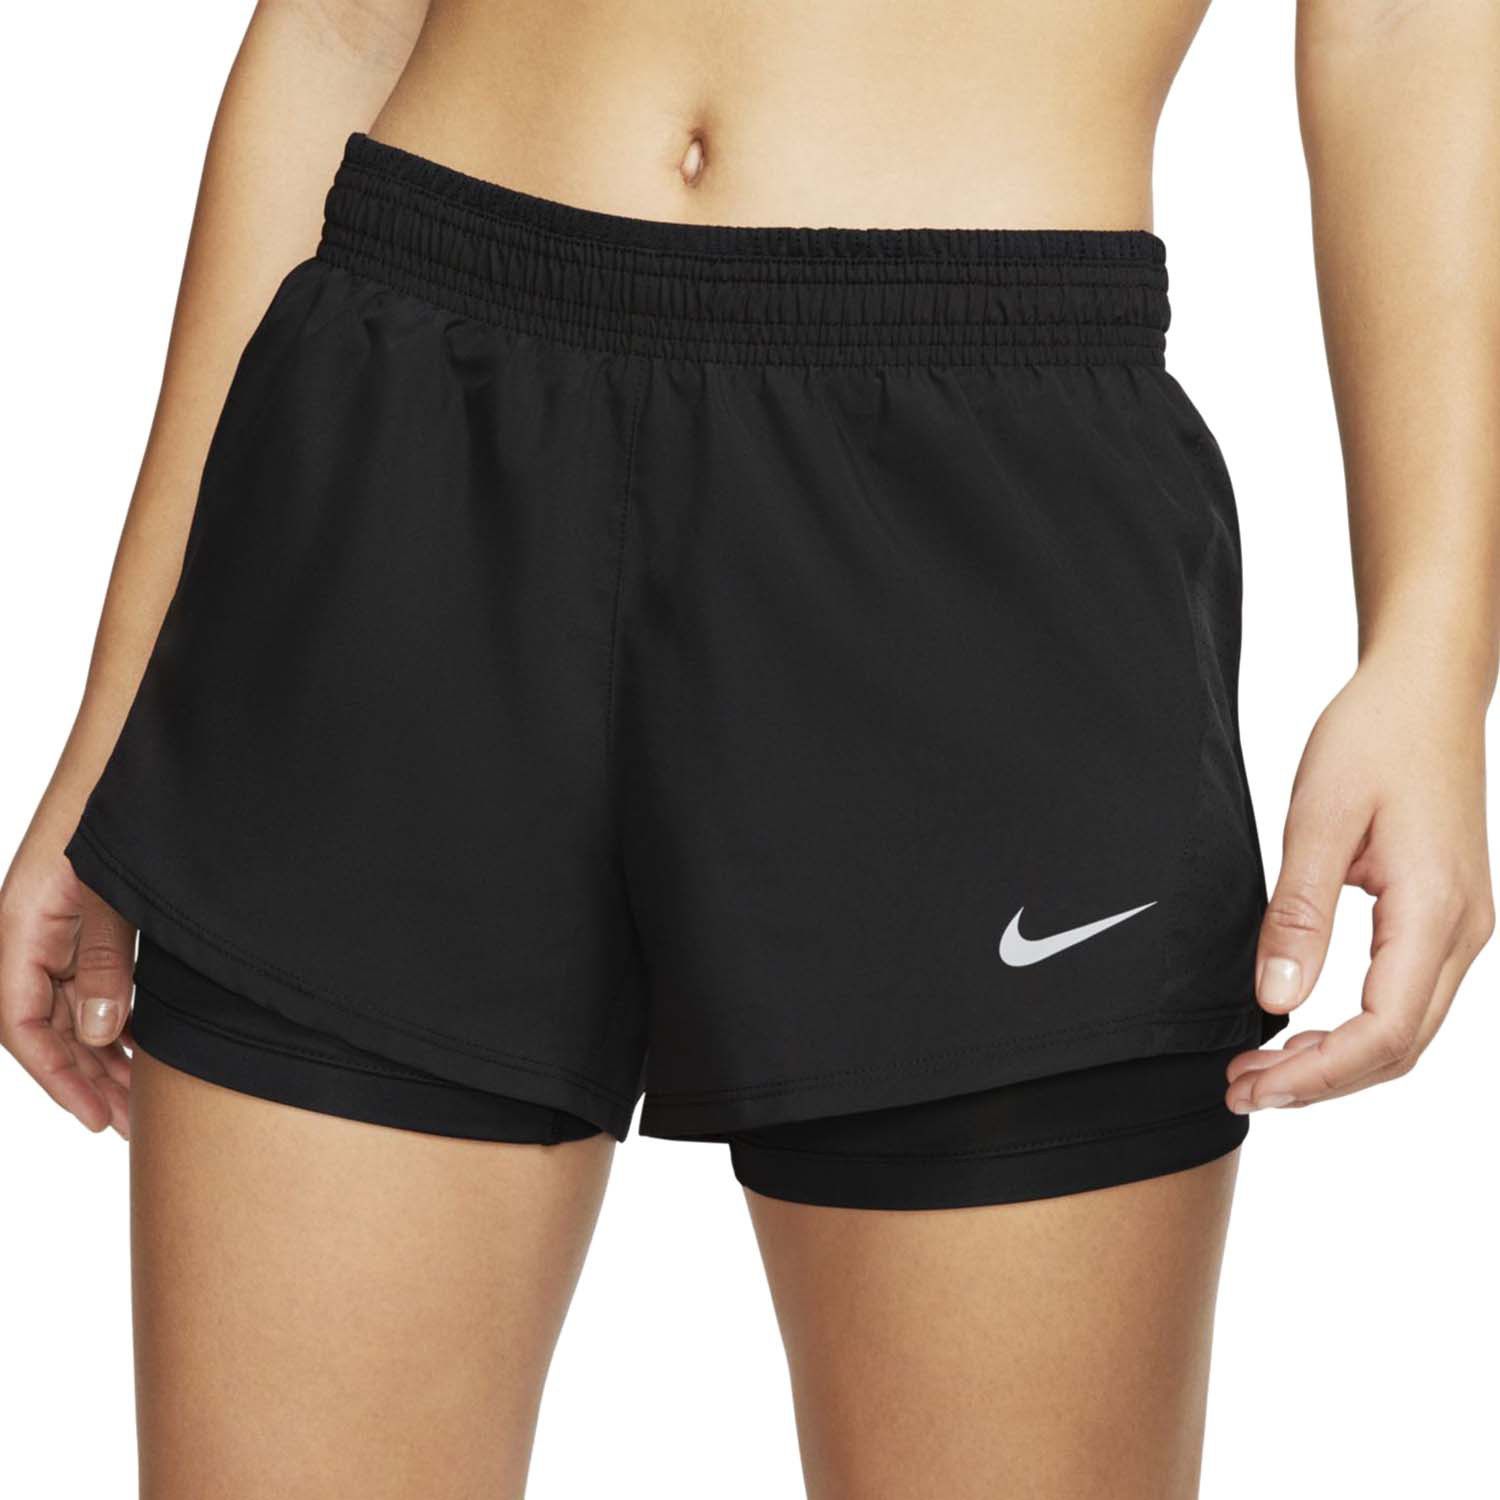 Women's Nike 2-in-1 Running Shorts